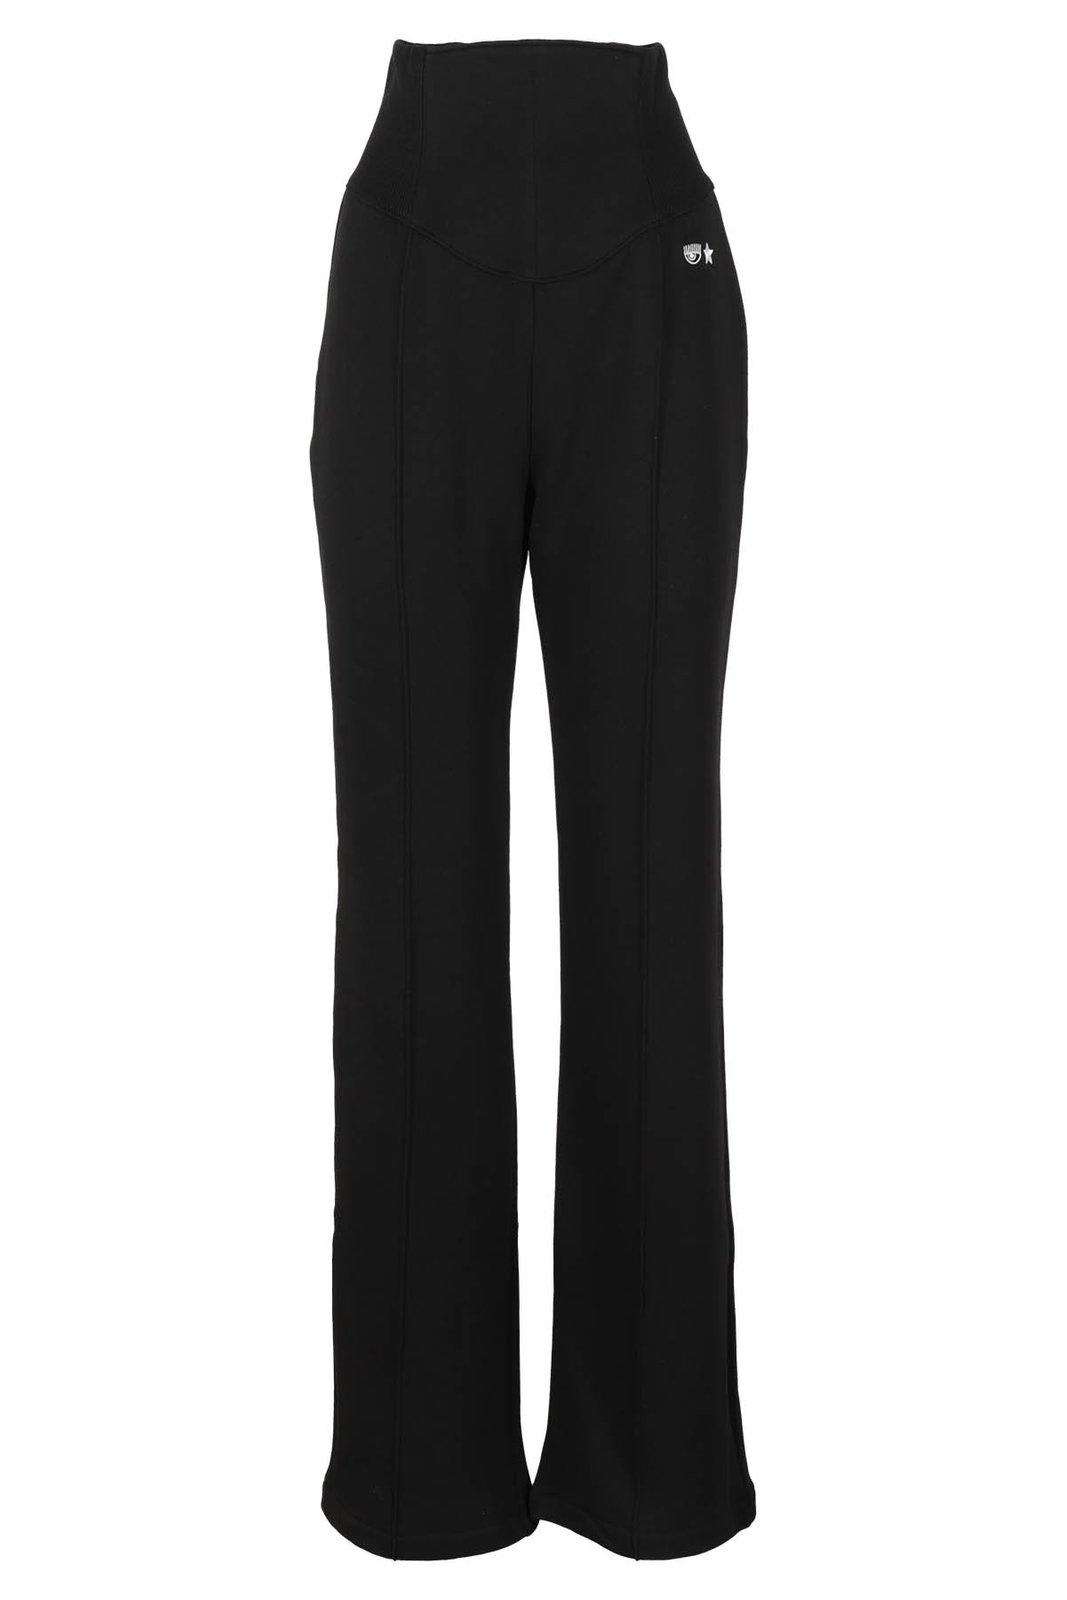 CHIARA FERRAGNI EYE-STAR EMBROIDERED HIGH-WAIST trousers